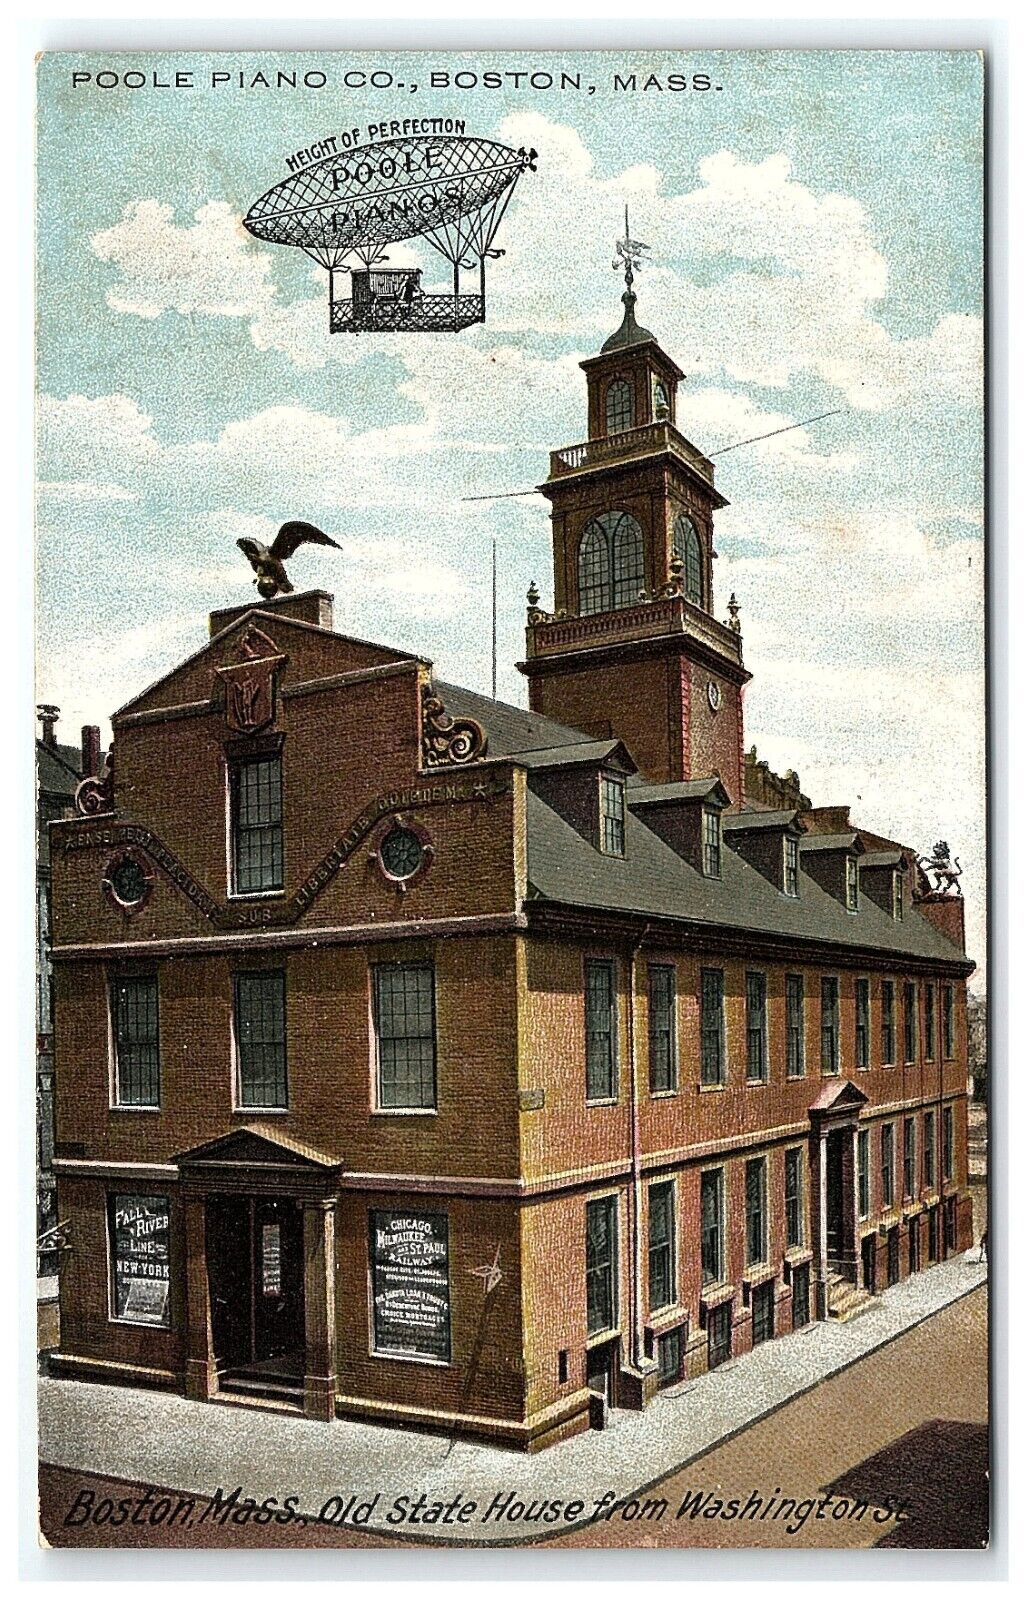 1901-07 Postcard Poole Piano Co Boston MA Old State House From Washington St